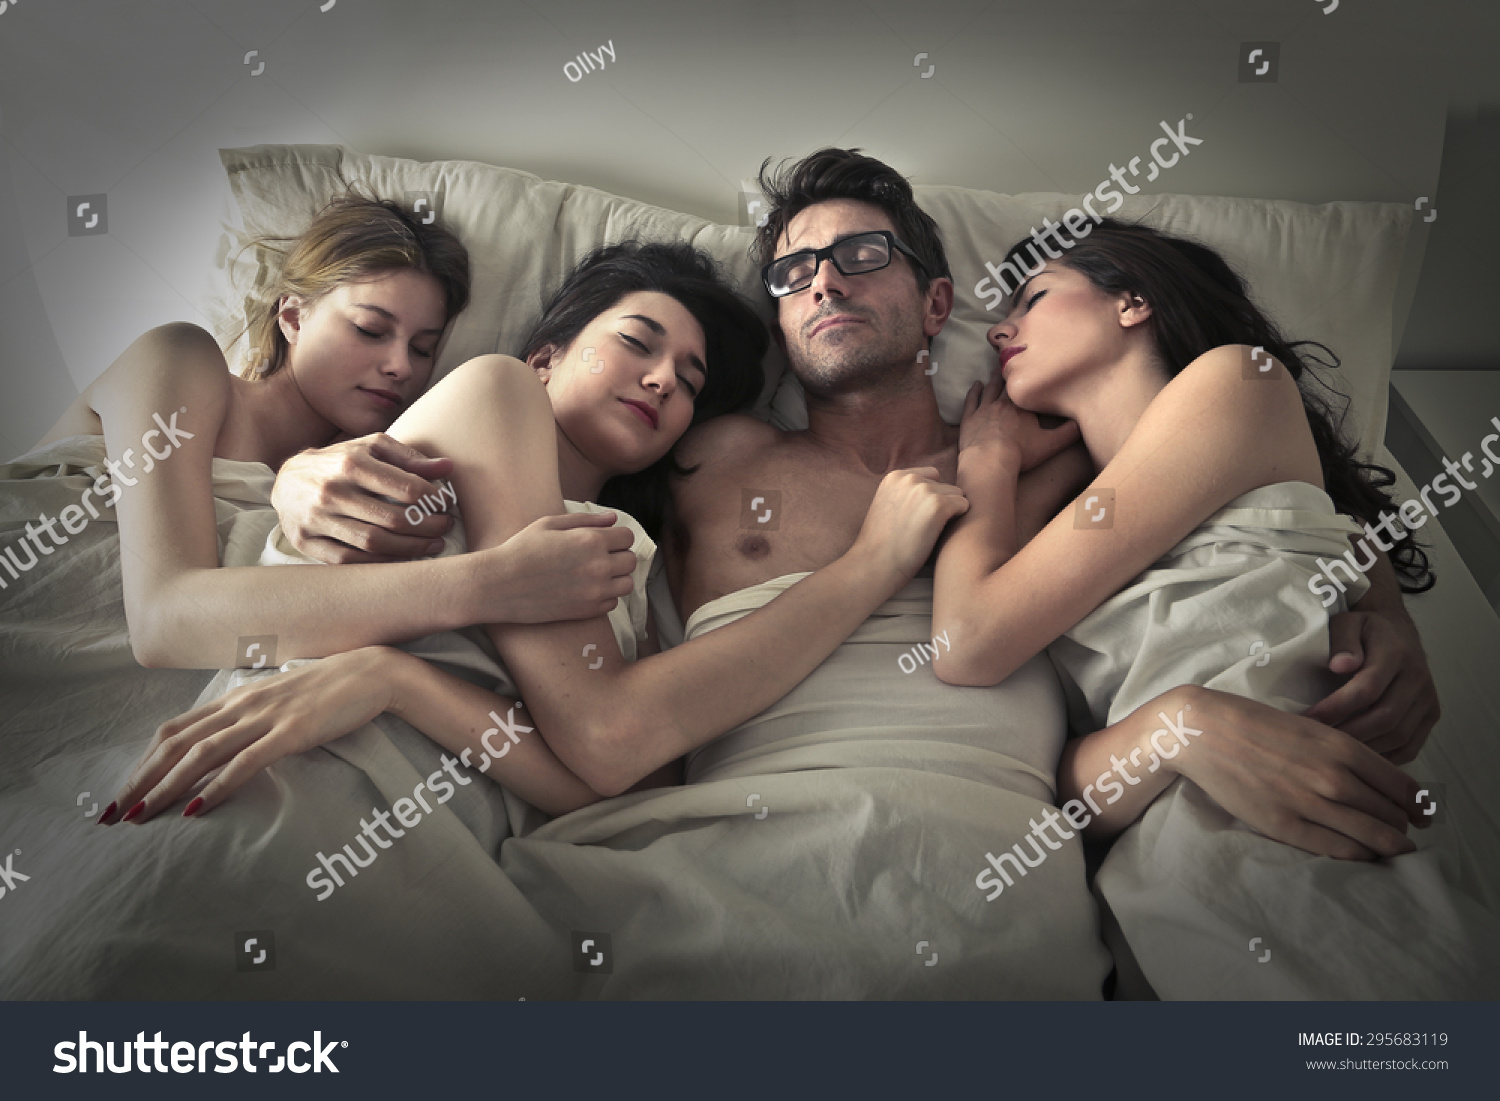 https://image.shutterstock.com/shutterstock/photos/295683119/display_1500/stock-photo-man-sleeping-with-three-girls-295683119.jpg